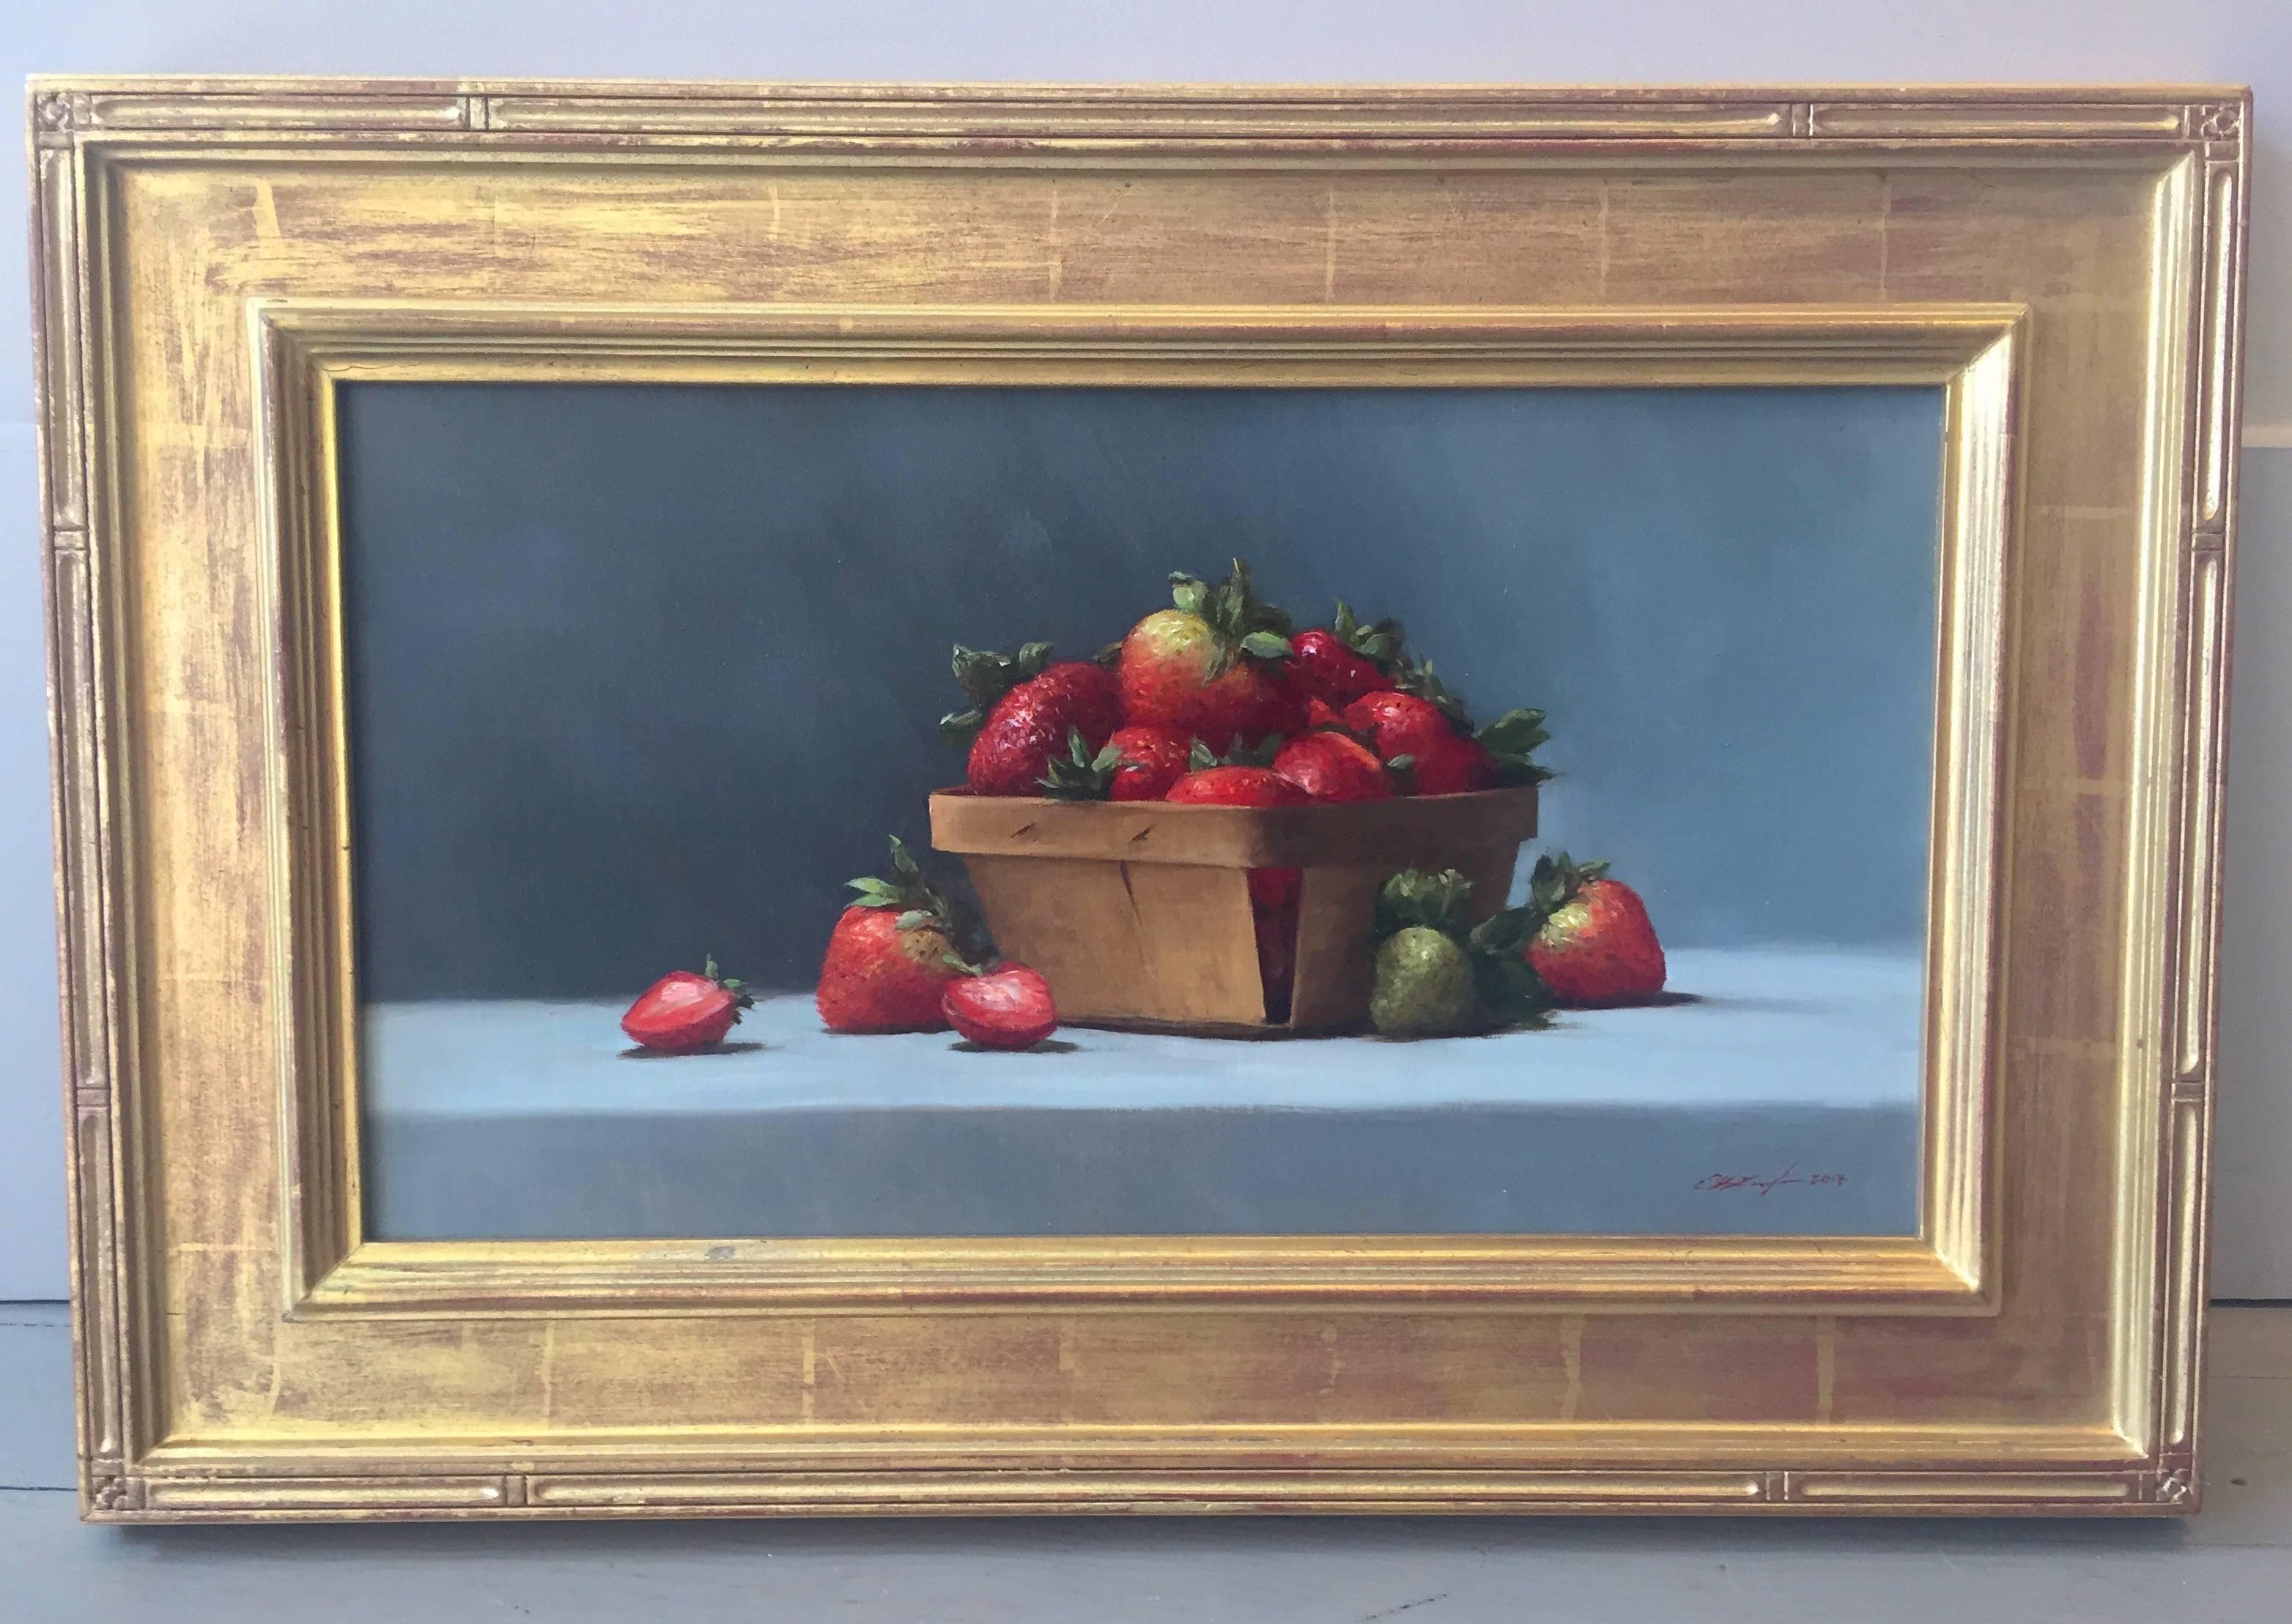 Strawberries - Painting by Sarah Lamb